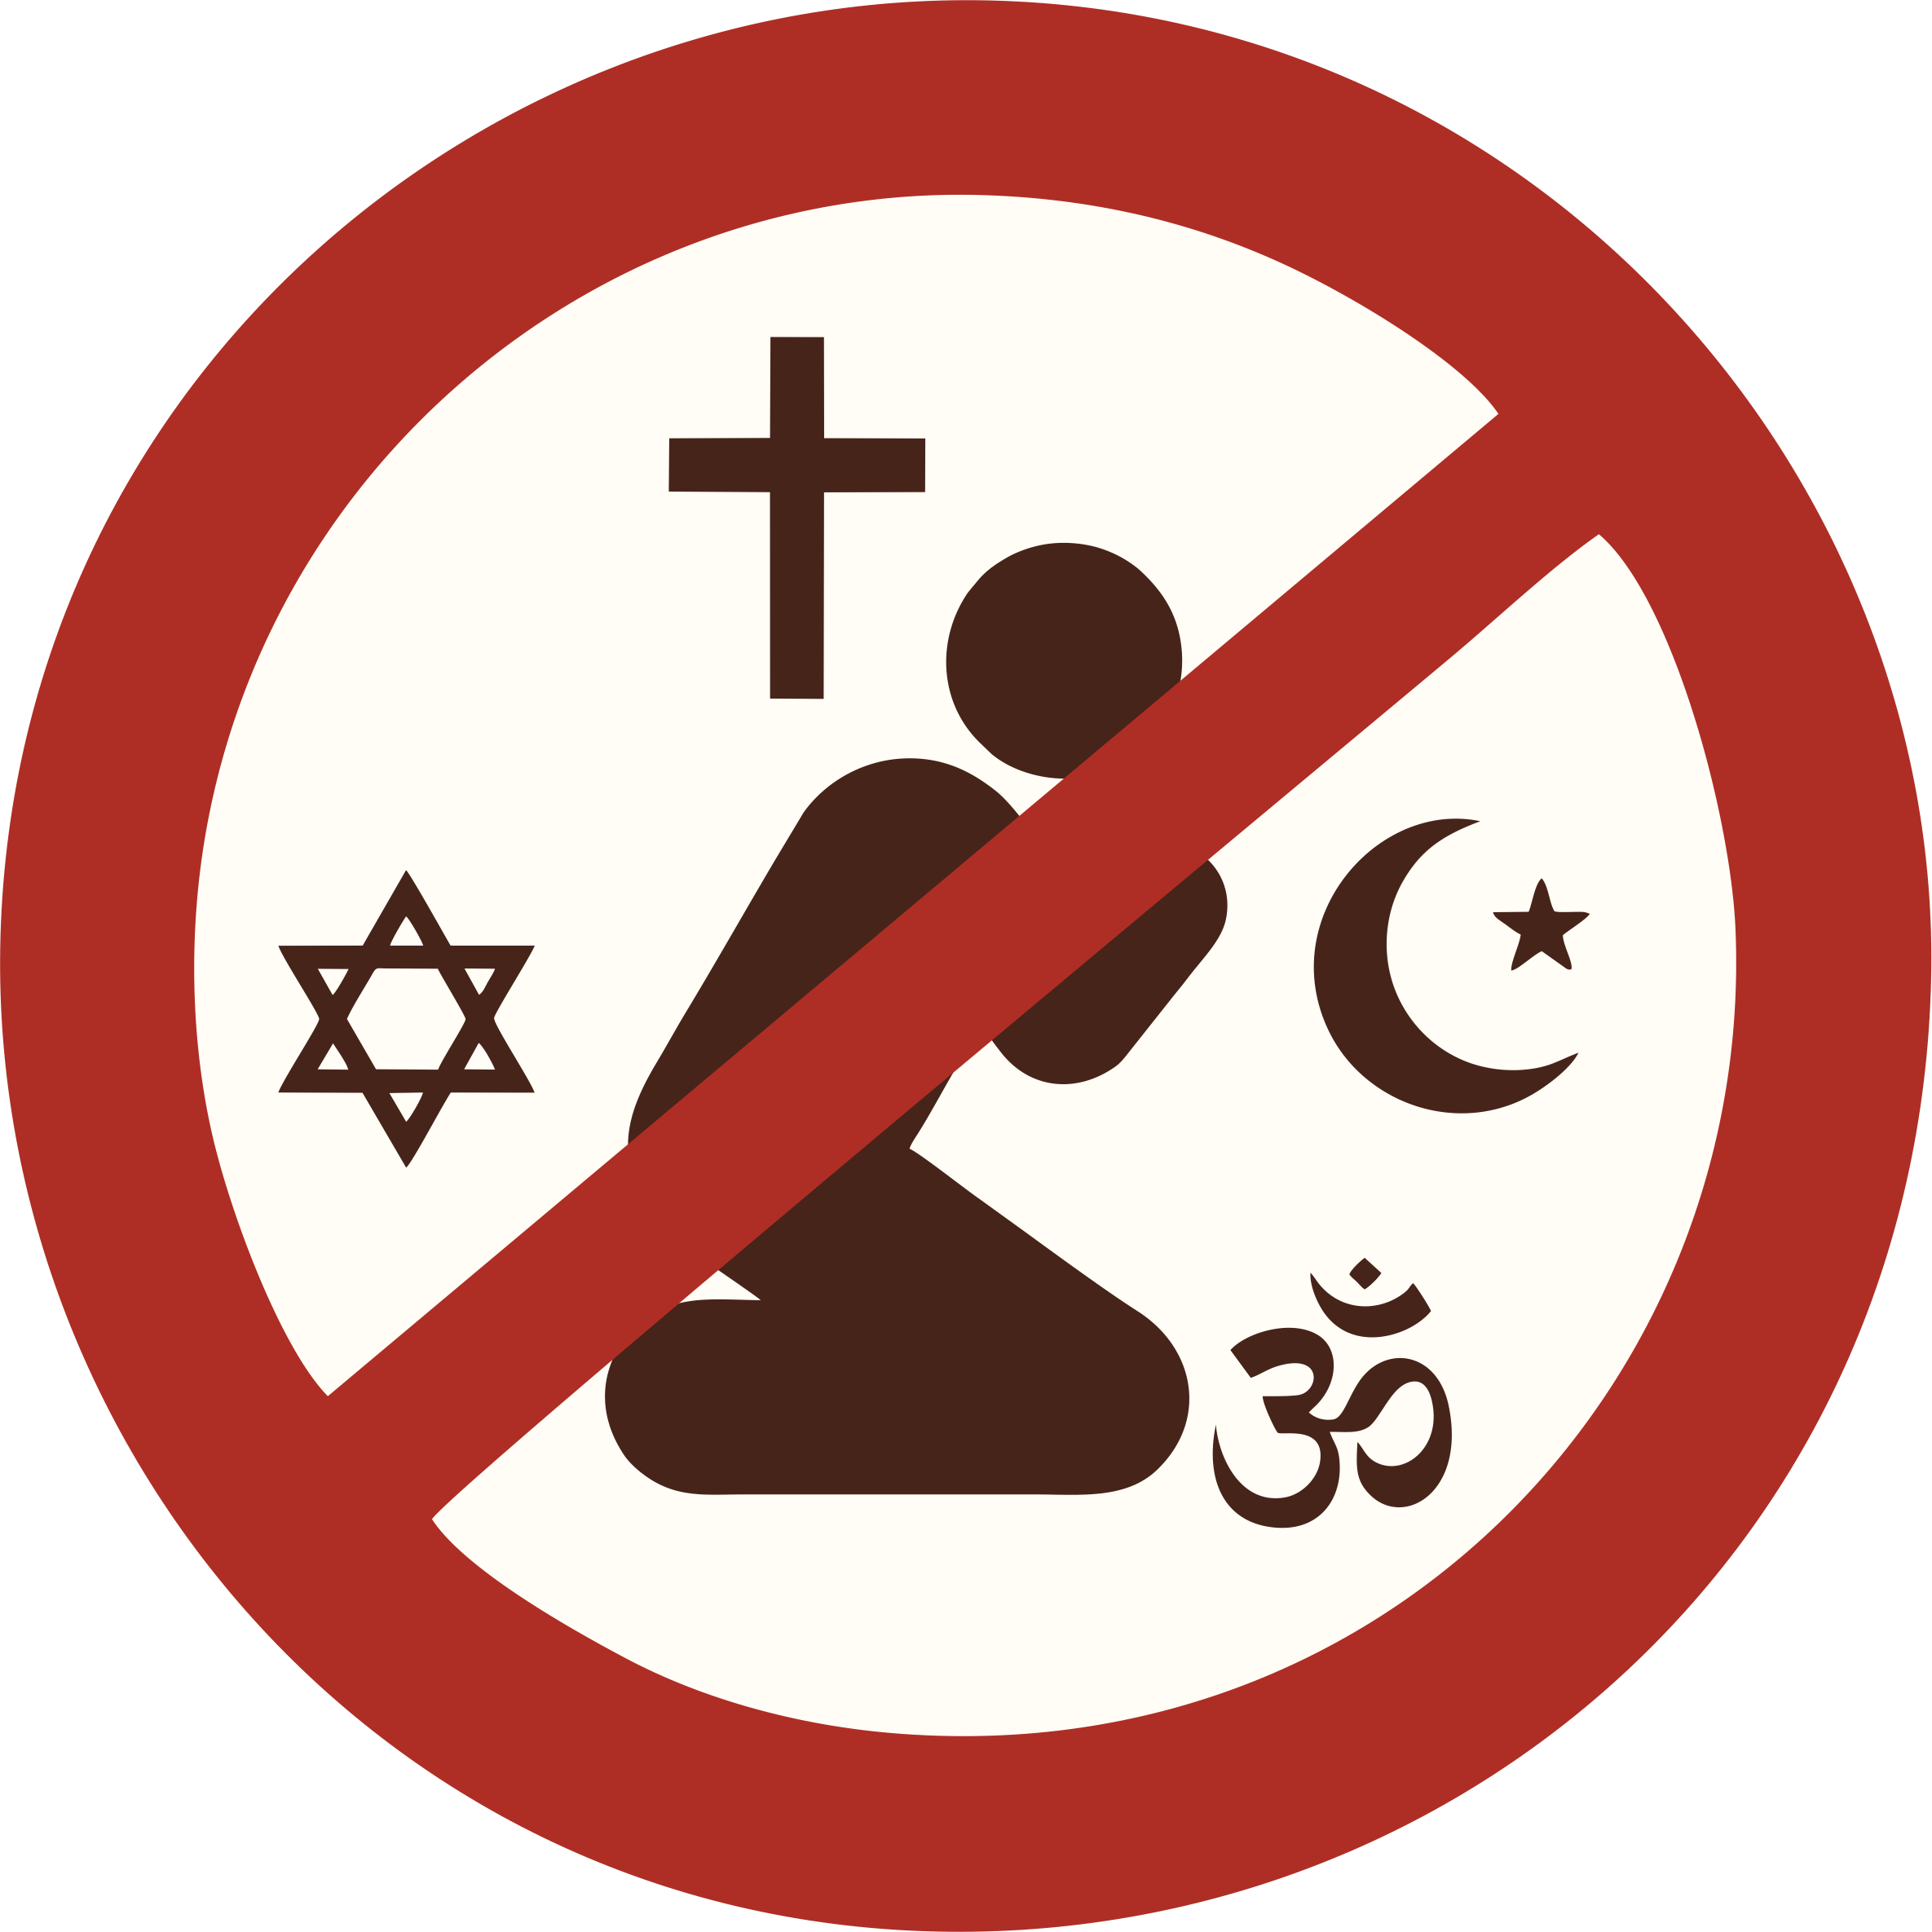 Manifestation religieuse et prosélytisme interdits.